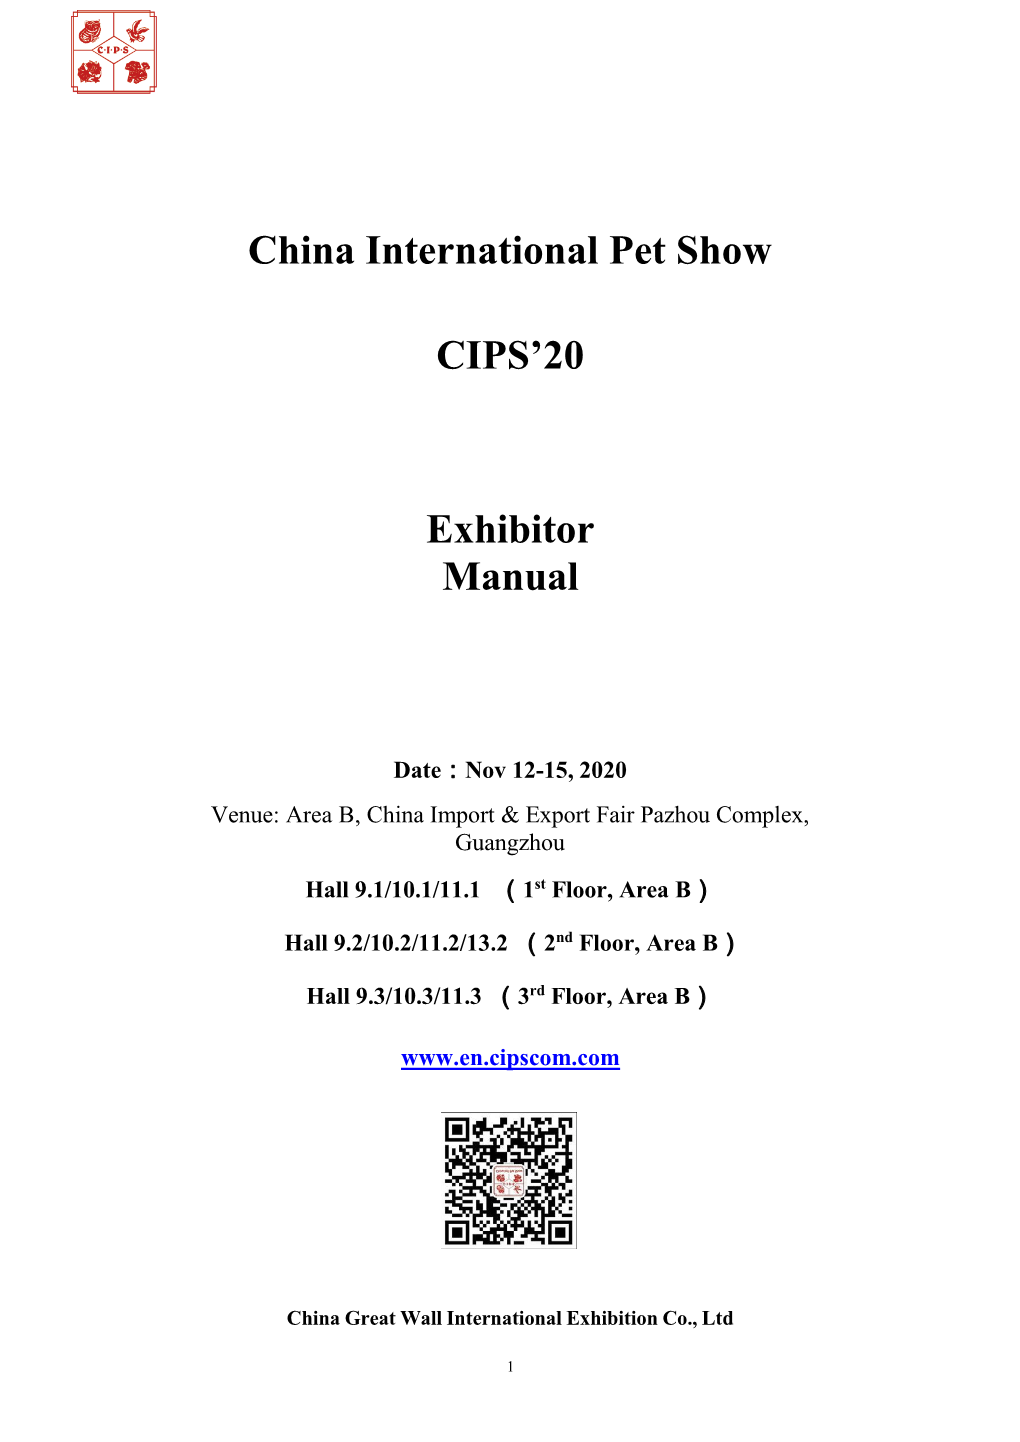 China International Pet Show CIPS'20 Exhibitor Manual